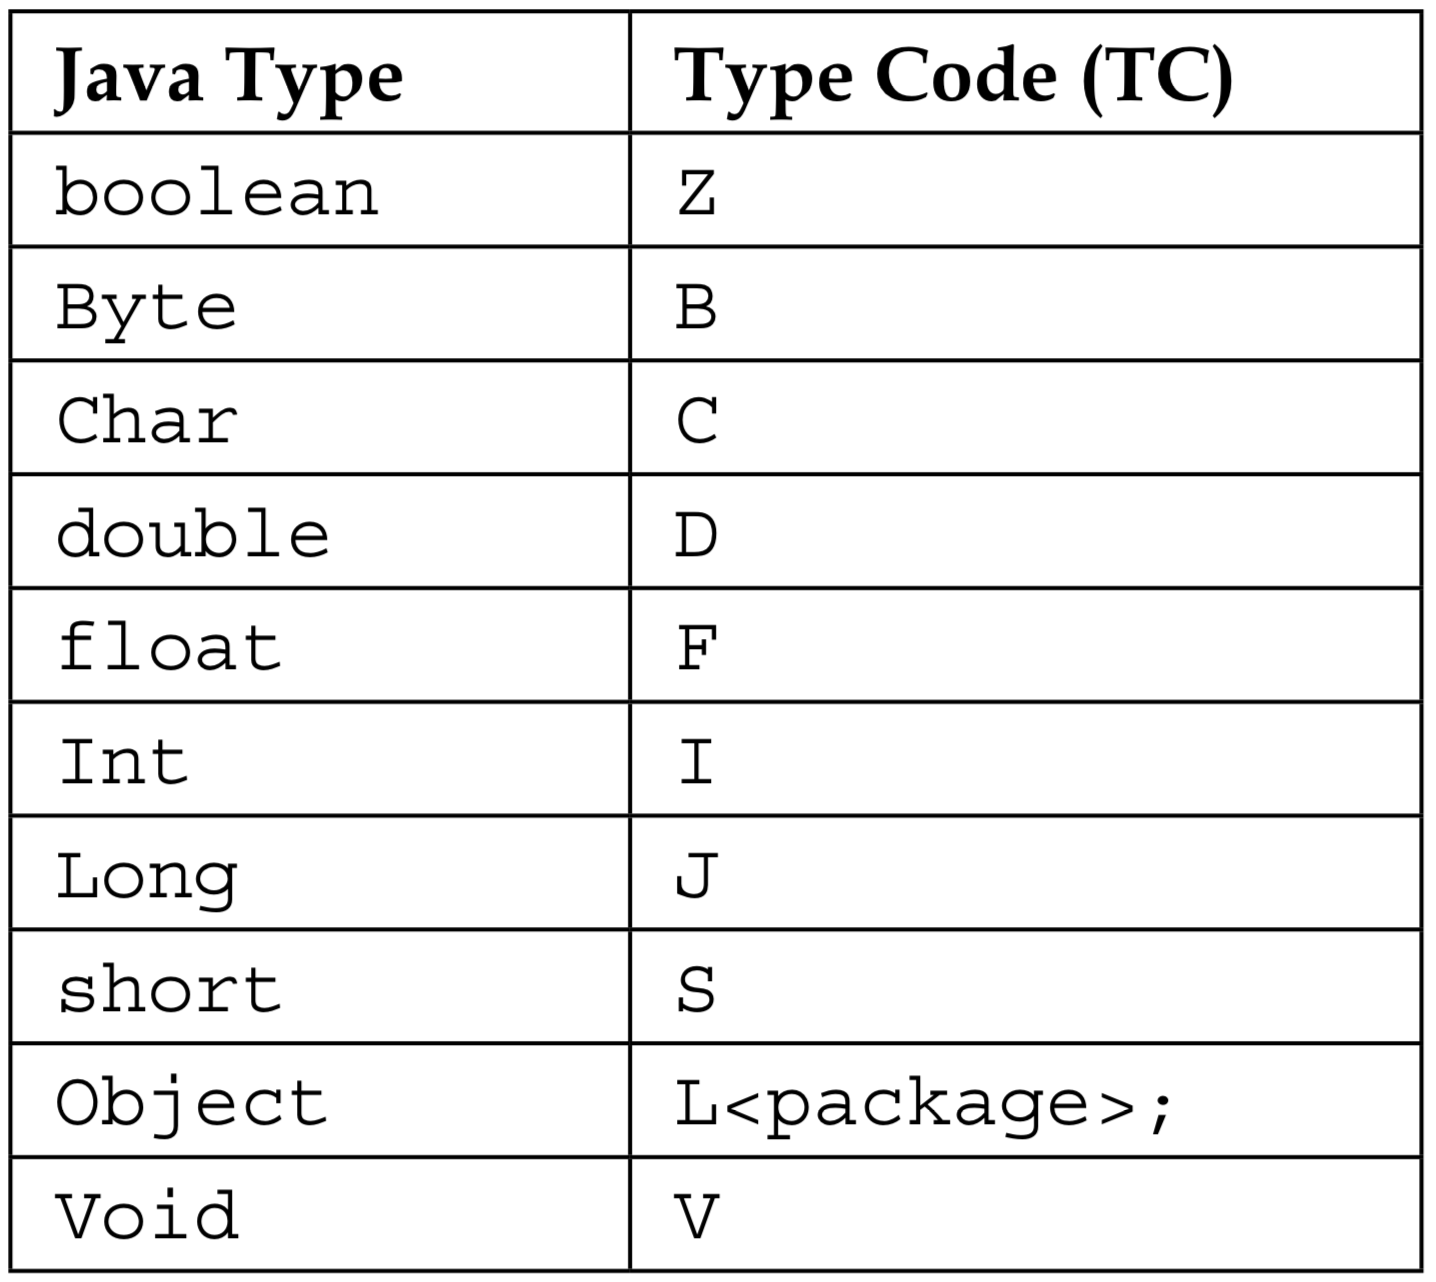 typeCode